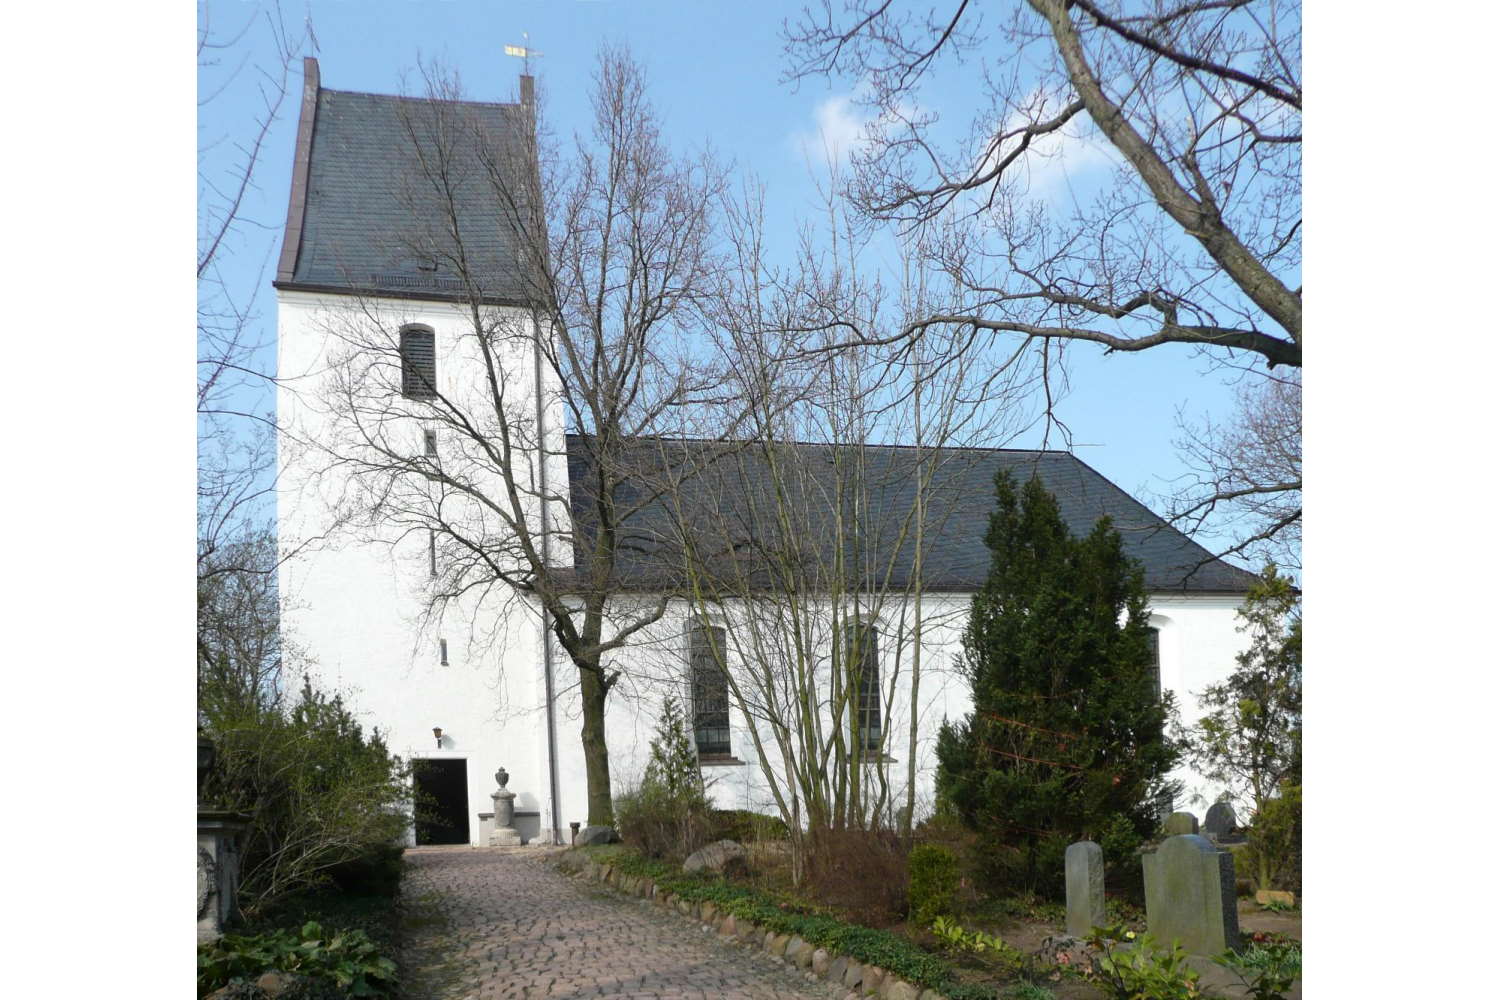 Kirche Panitzsch. Foto: ch ivk, CC BY 3.0, https://commons.wikimedia.org/w/index.php?curid=14714374